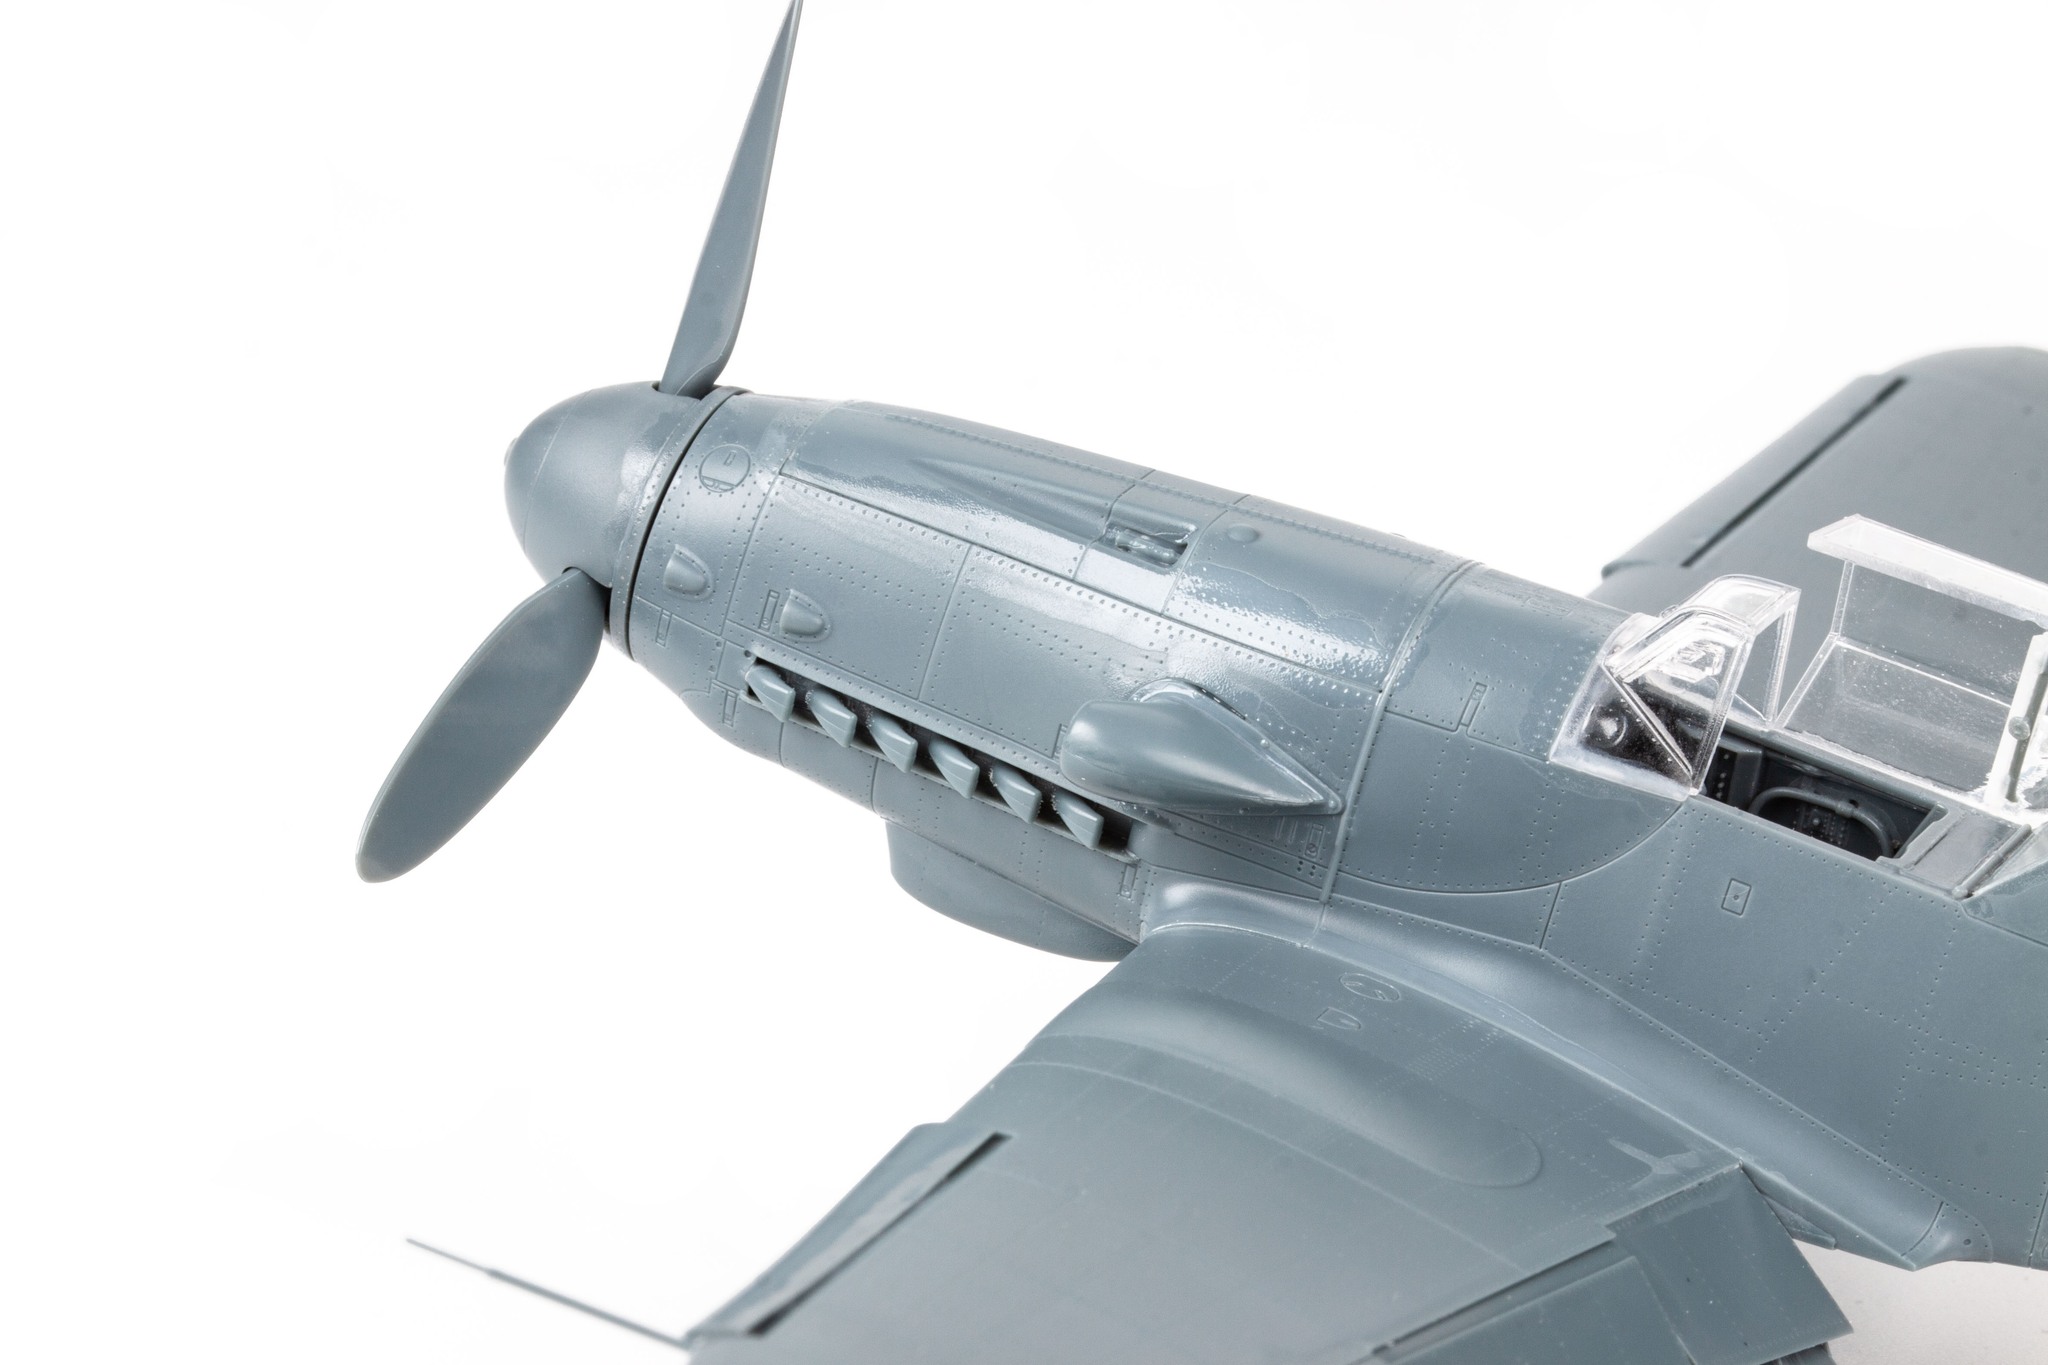 Eduard 11177 - KURFÜRST Bf 109K-4 Limited Edition 1/48 scale model